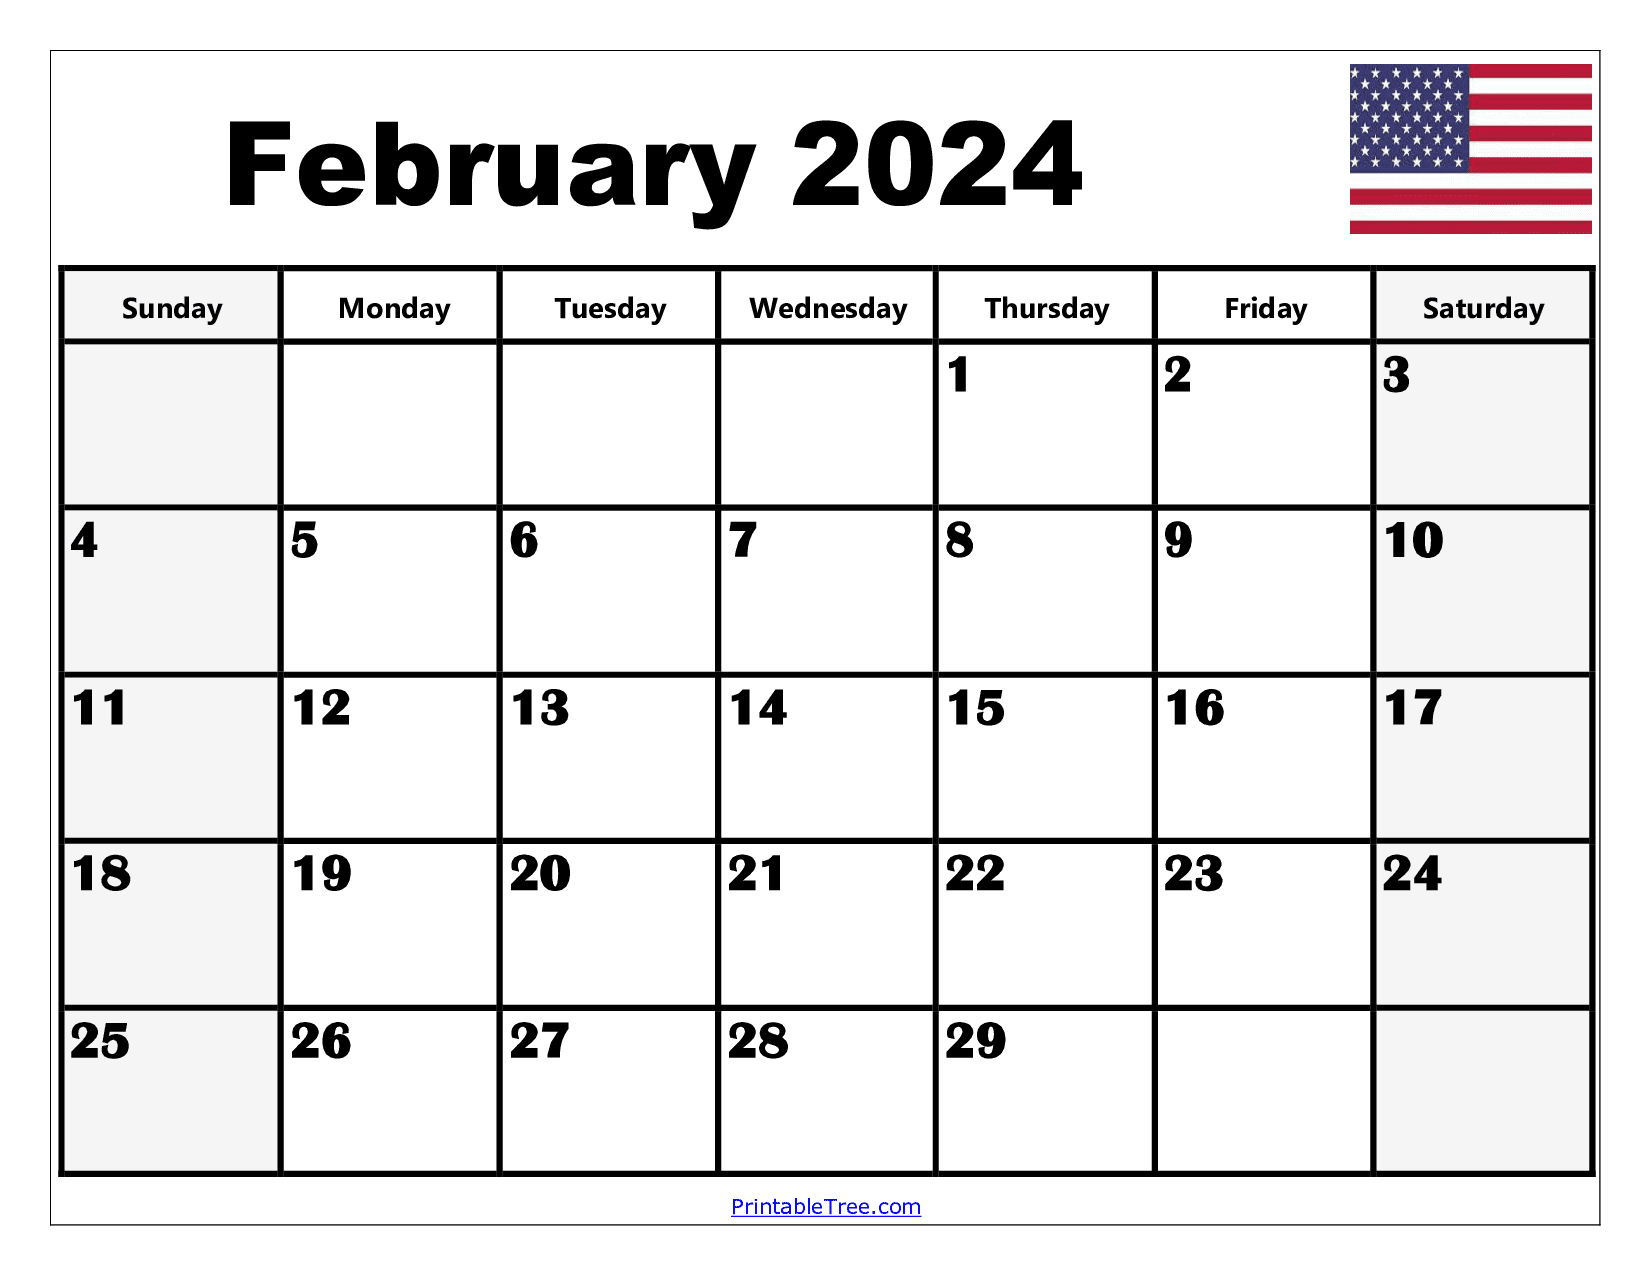 Calendar Holidays For February 2024 Binny Cheslie